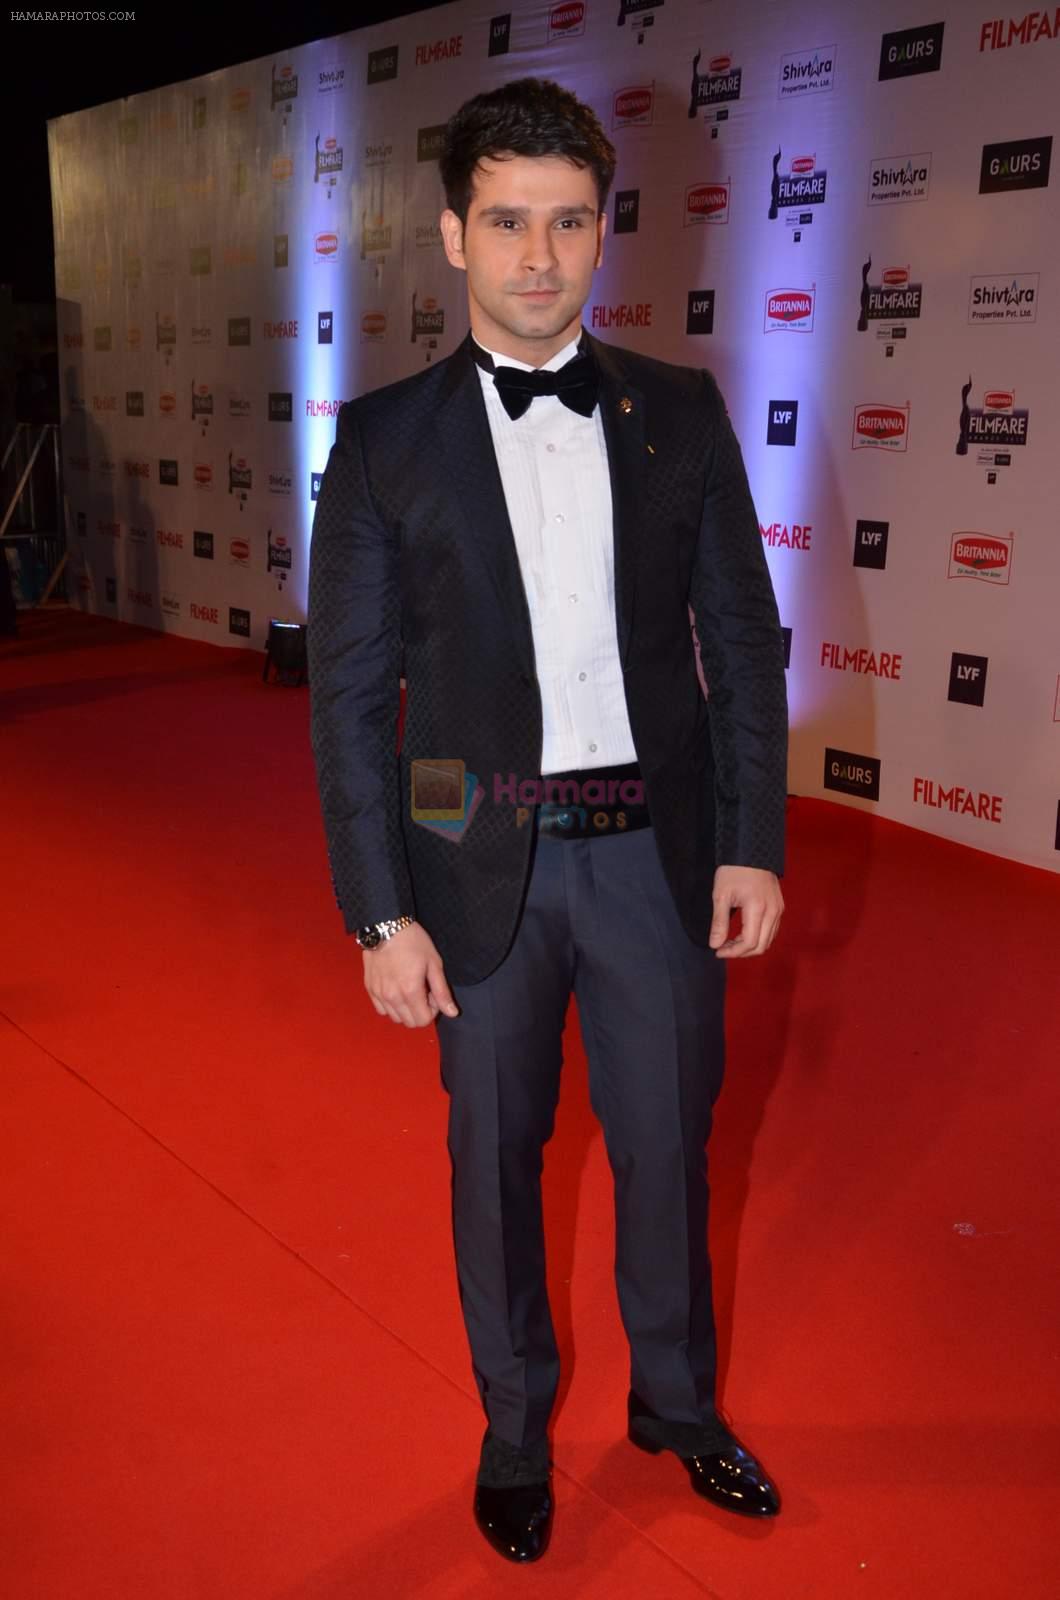 Girish Kumar at Filmfare Awards 2016 on 15th Jan 2016